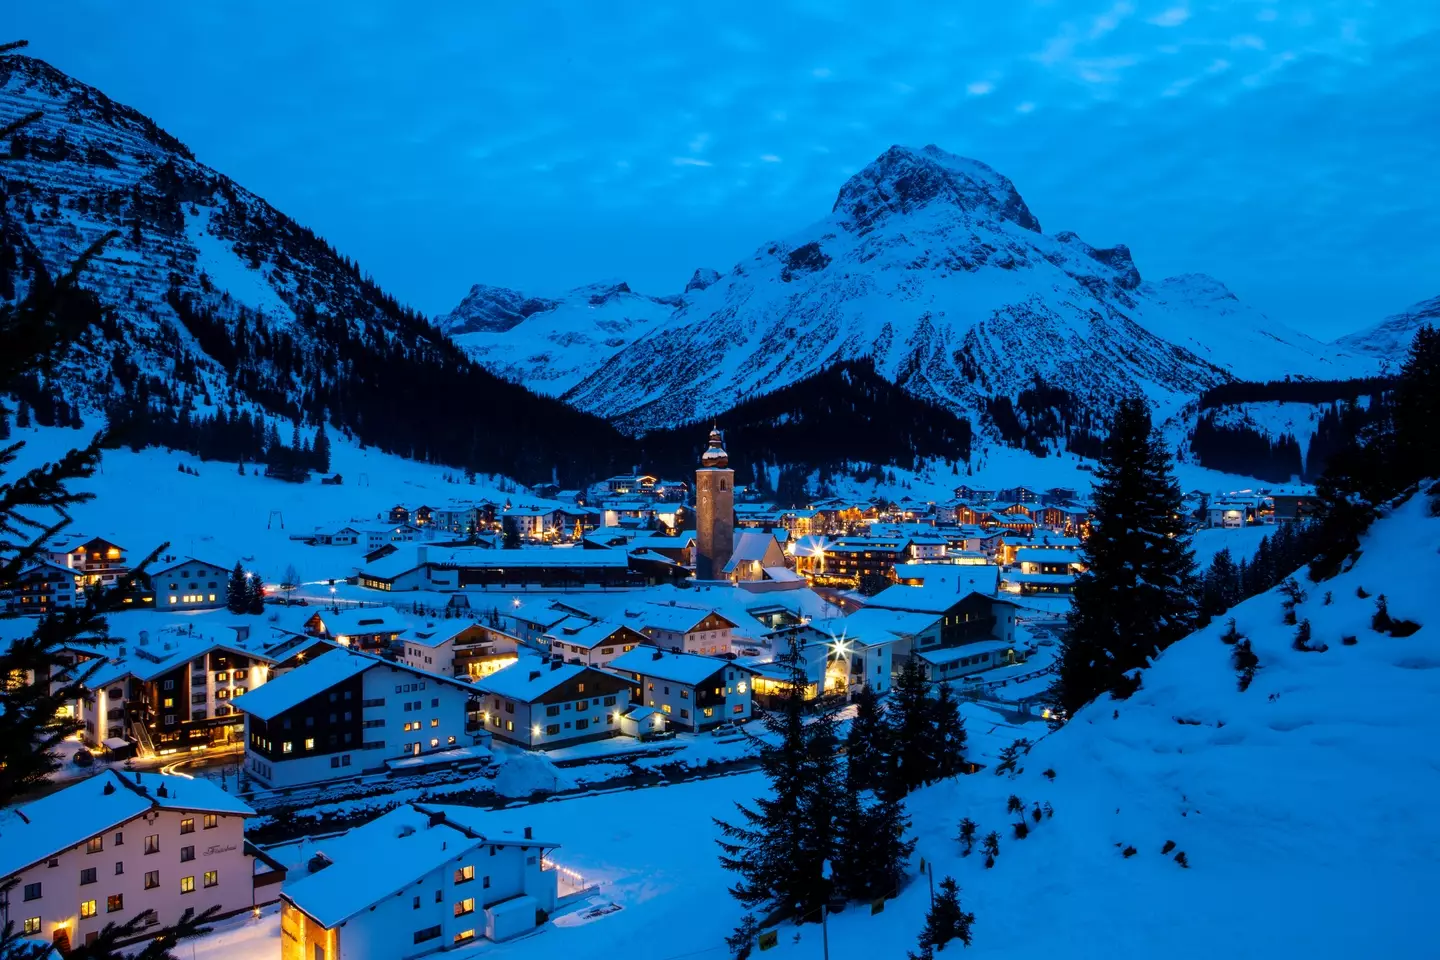 The Lech ski resort at night.